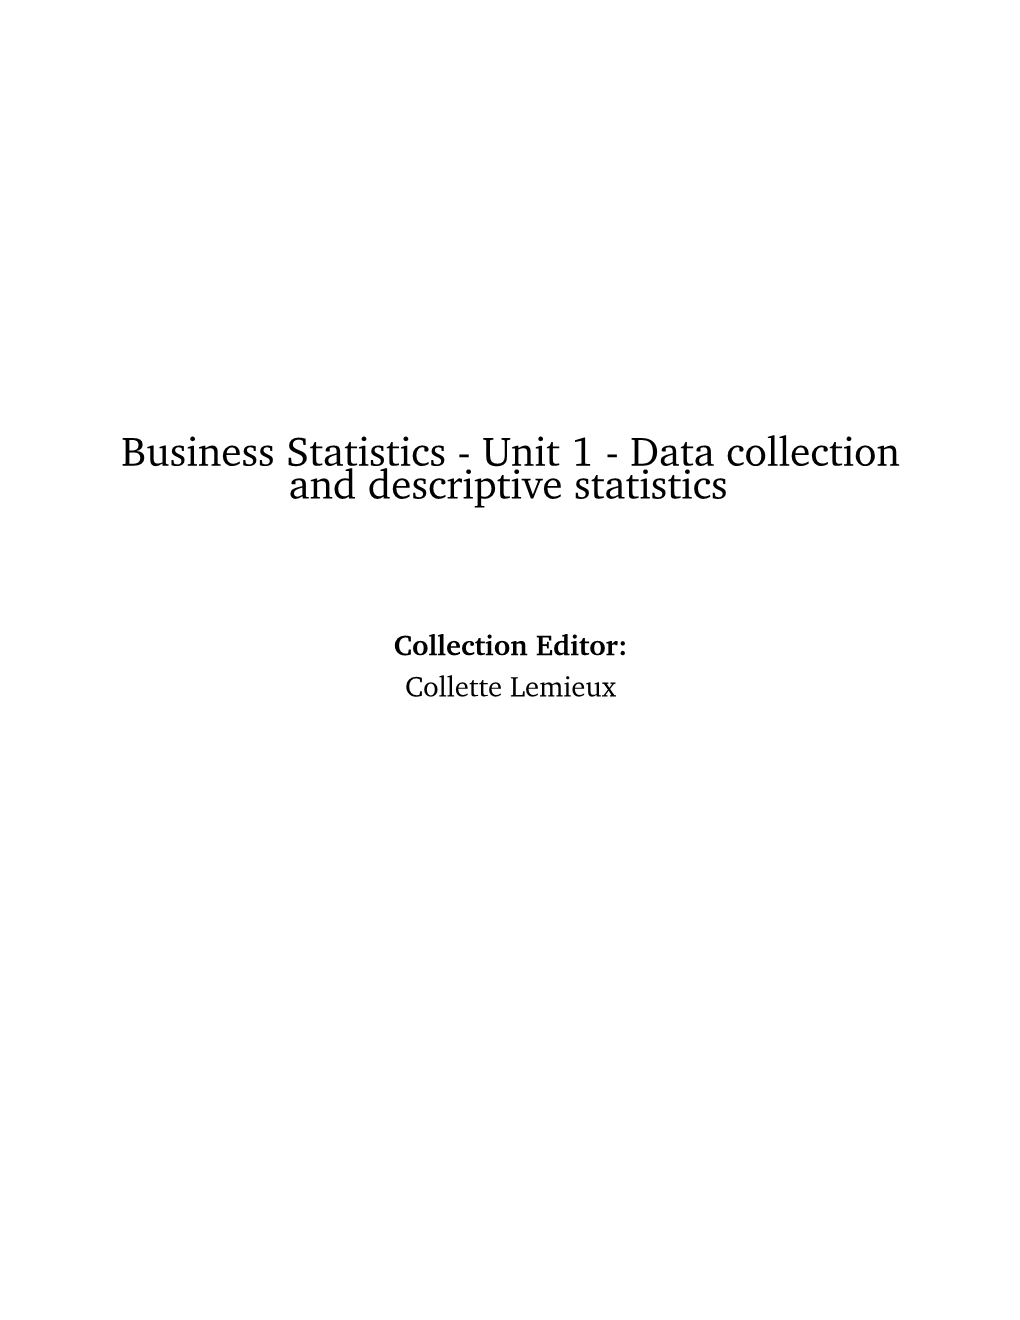 Unit 1 - Data Collection and Descriptive Statistics